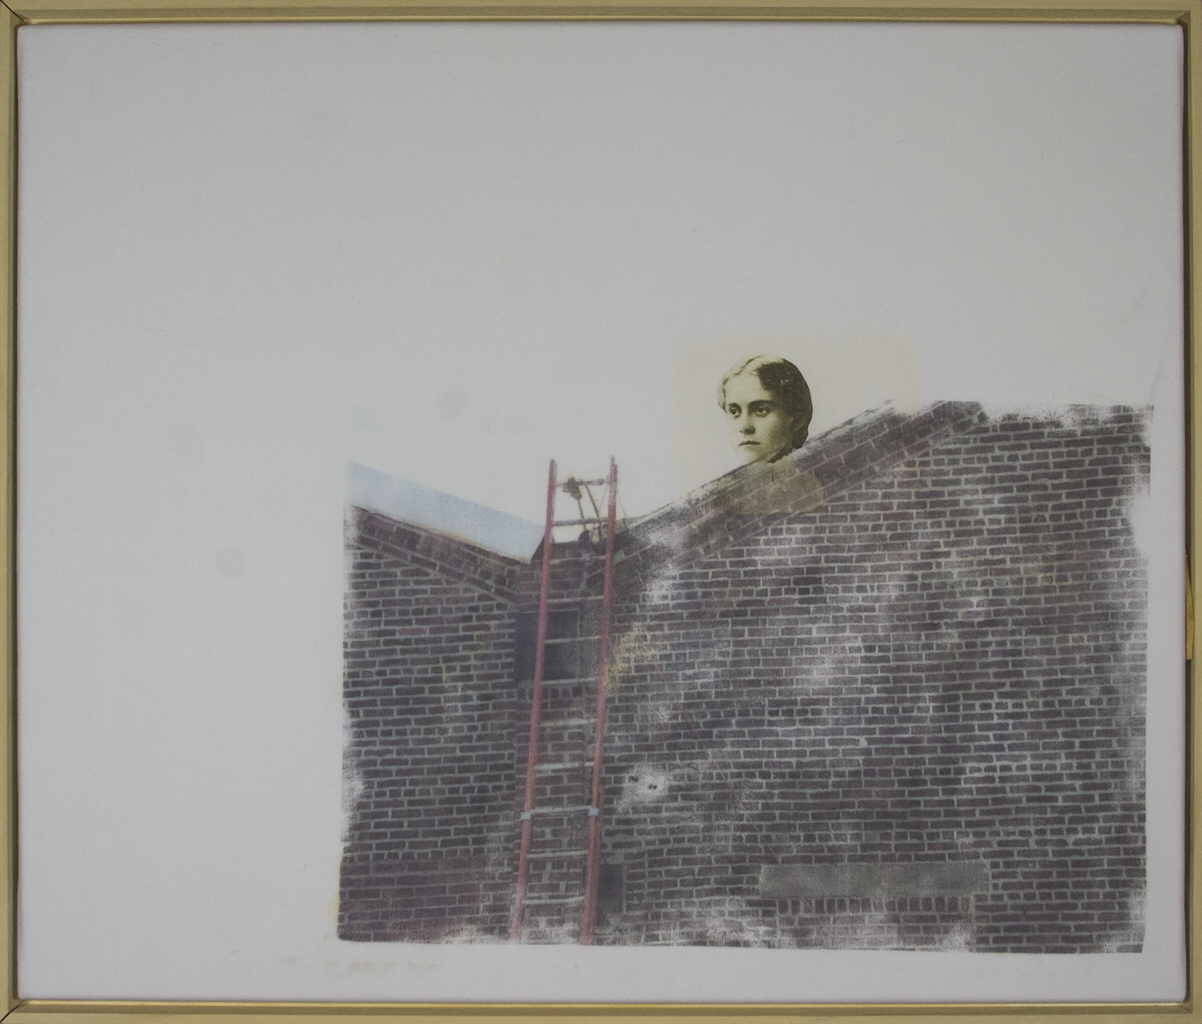 Zauner Christa 
"Escalator", 2004
Frottage / Leinwand
50 x 60 cm